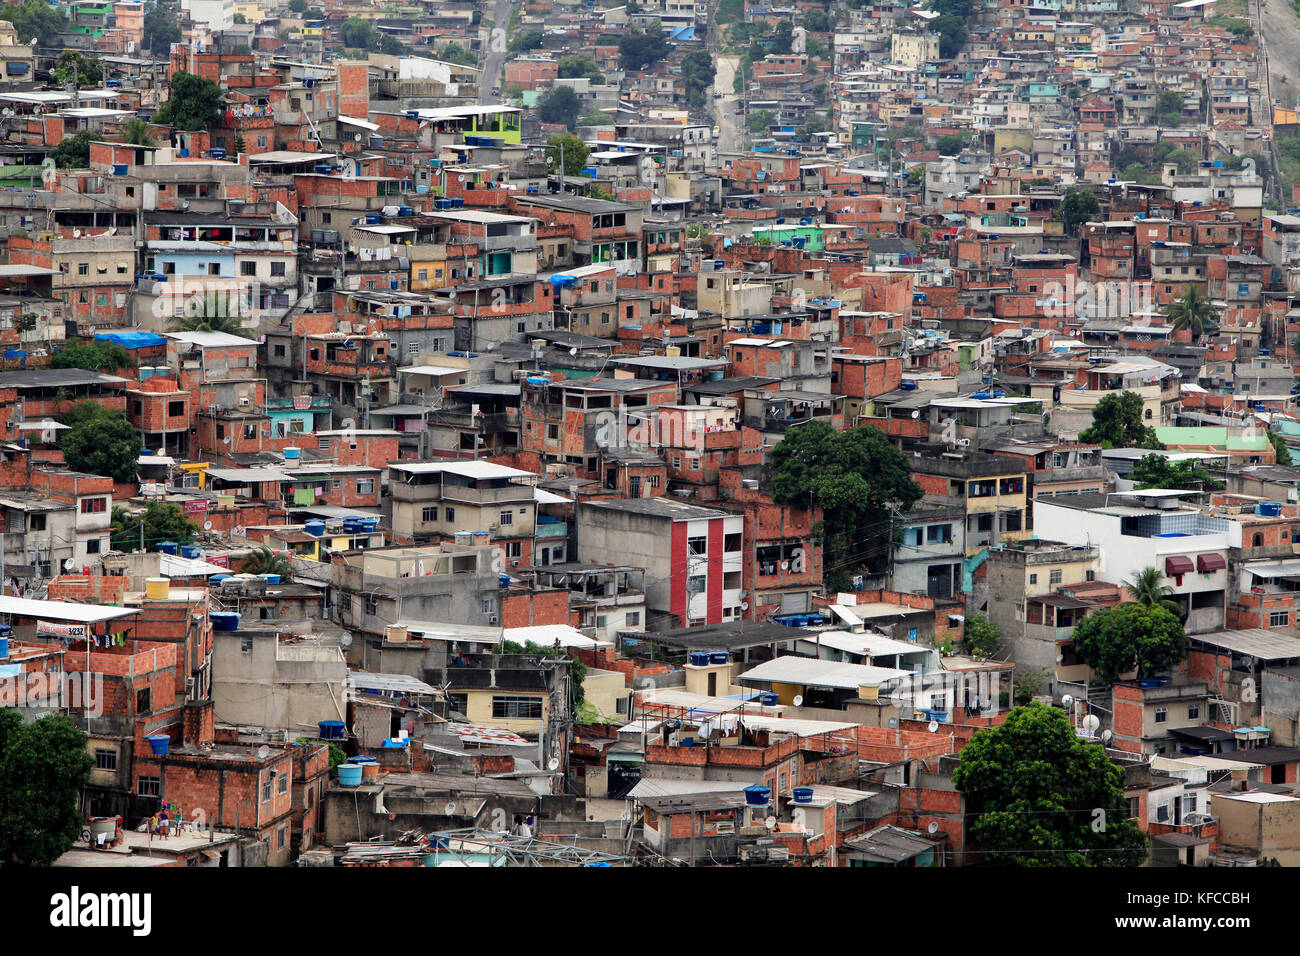 Amador favela